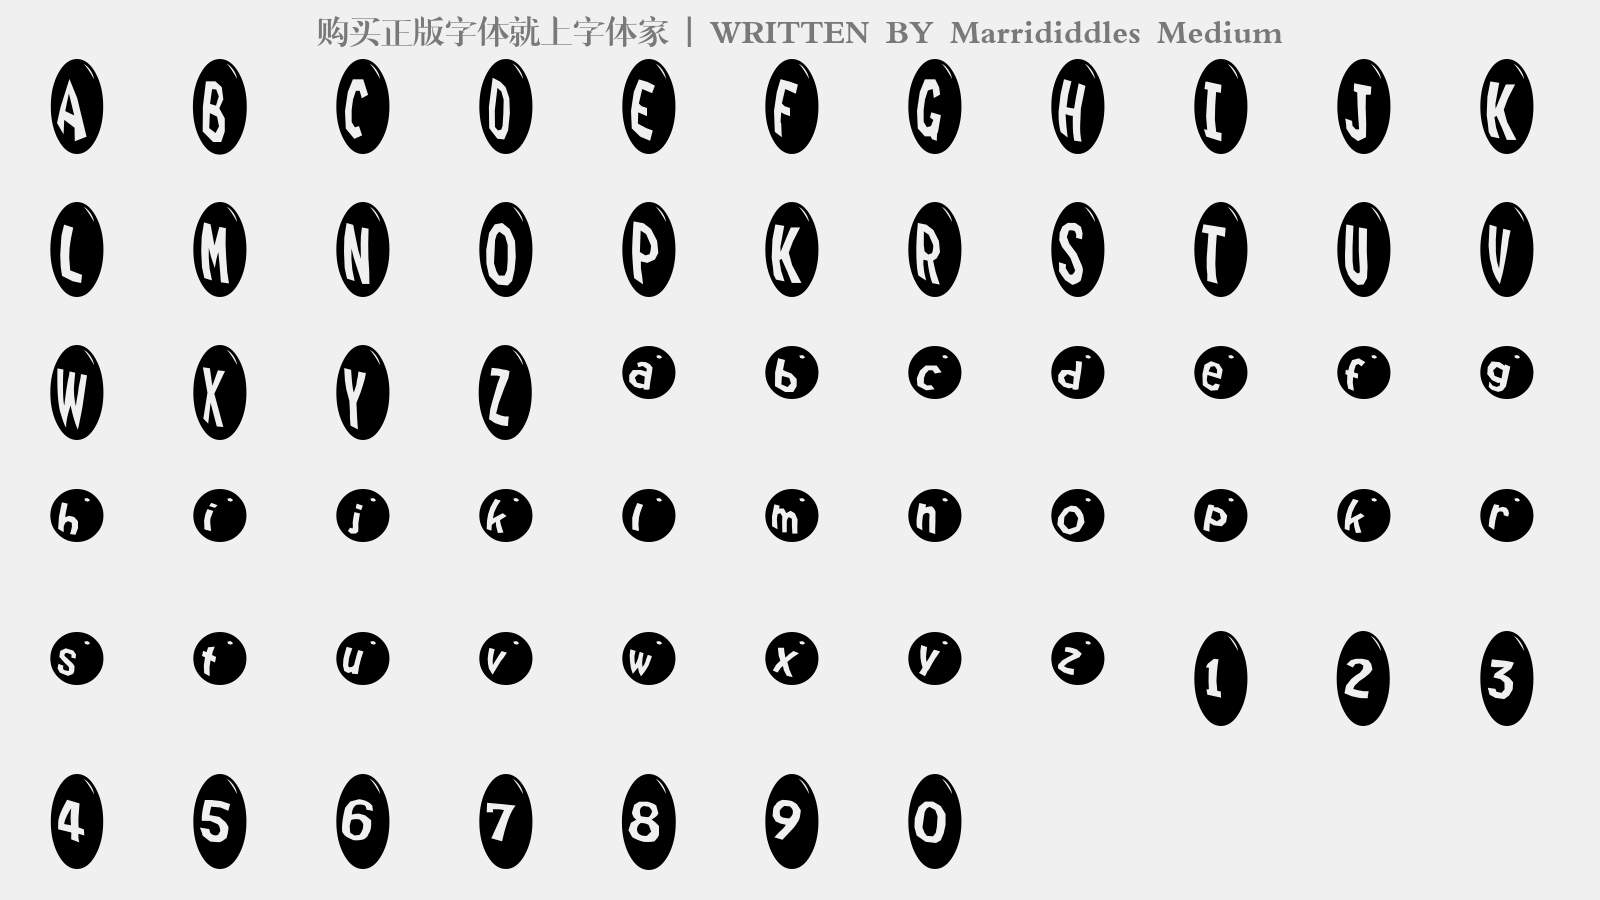 Marrididdles Medium - 大写字母/小写字母/数字